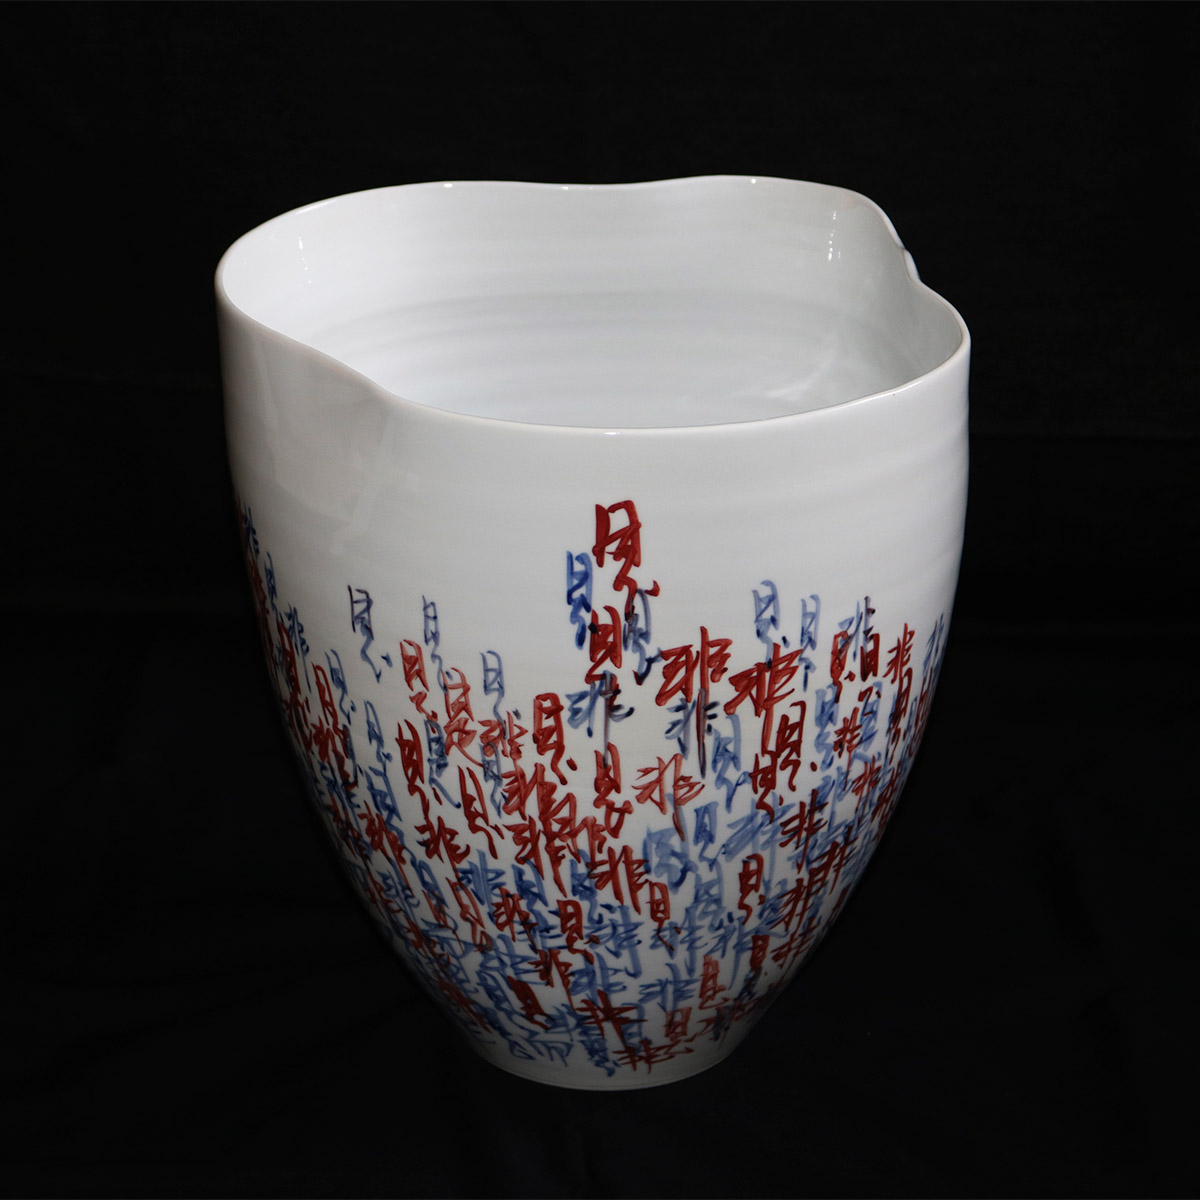 NewingerART: "Untitled vase 2" (Wei Ping)